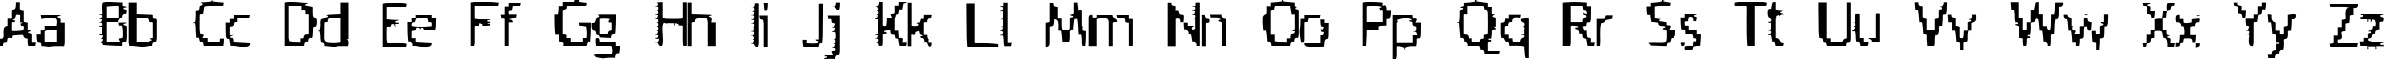 Пример написания английского алфавита шрифтом Aileenation